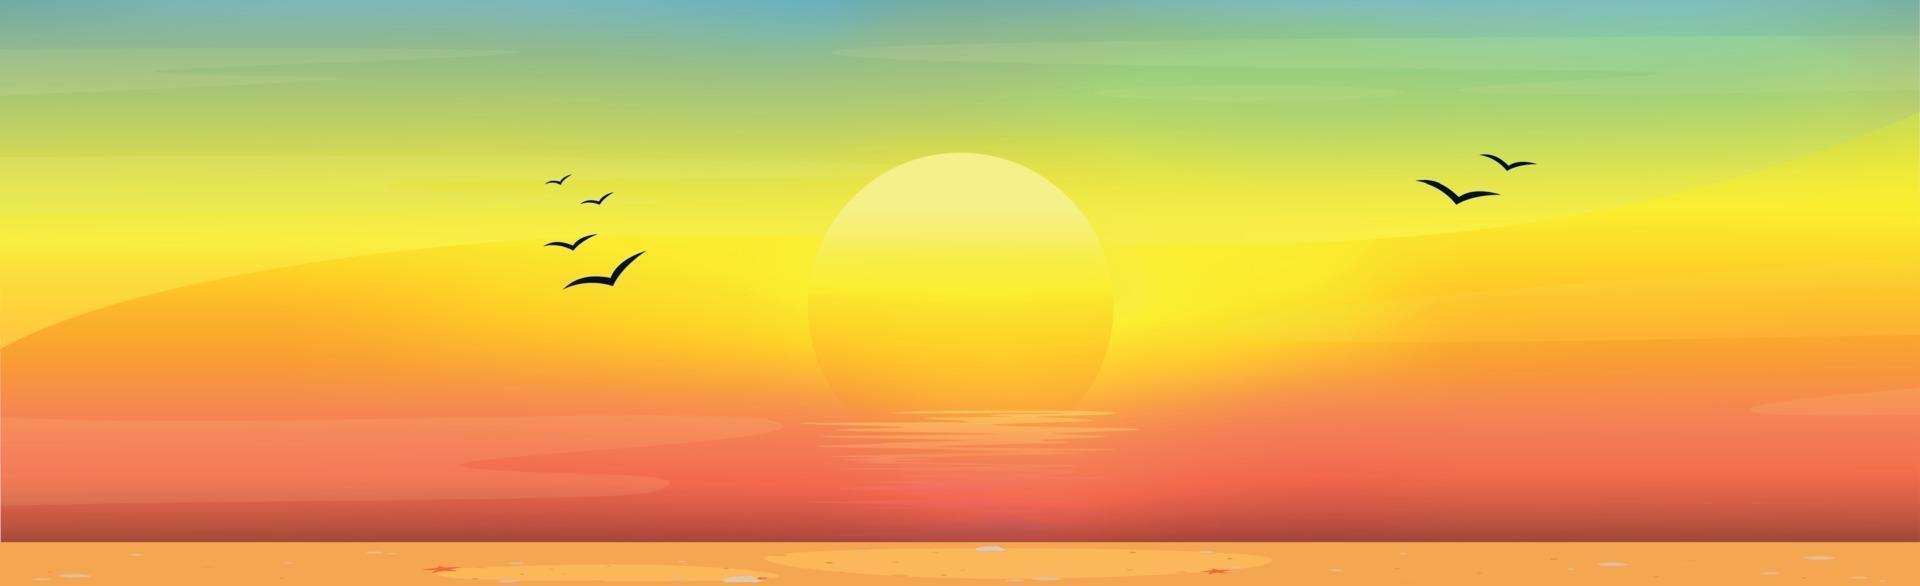 Illustration of a sunny sandy beach at sunset vector